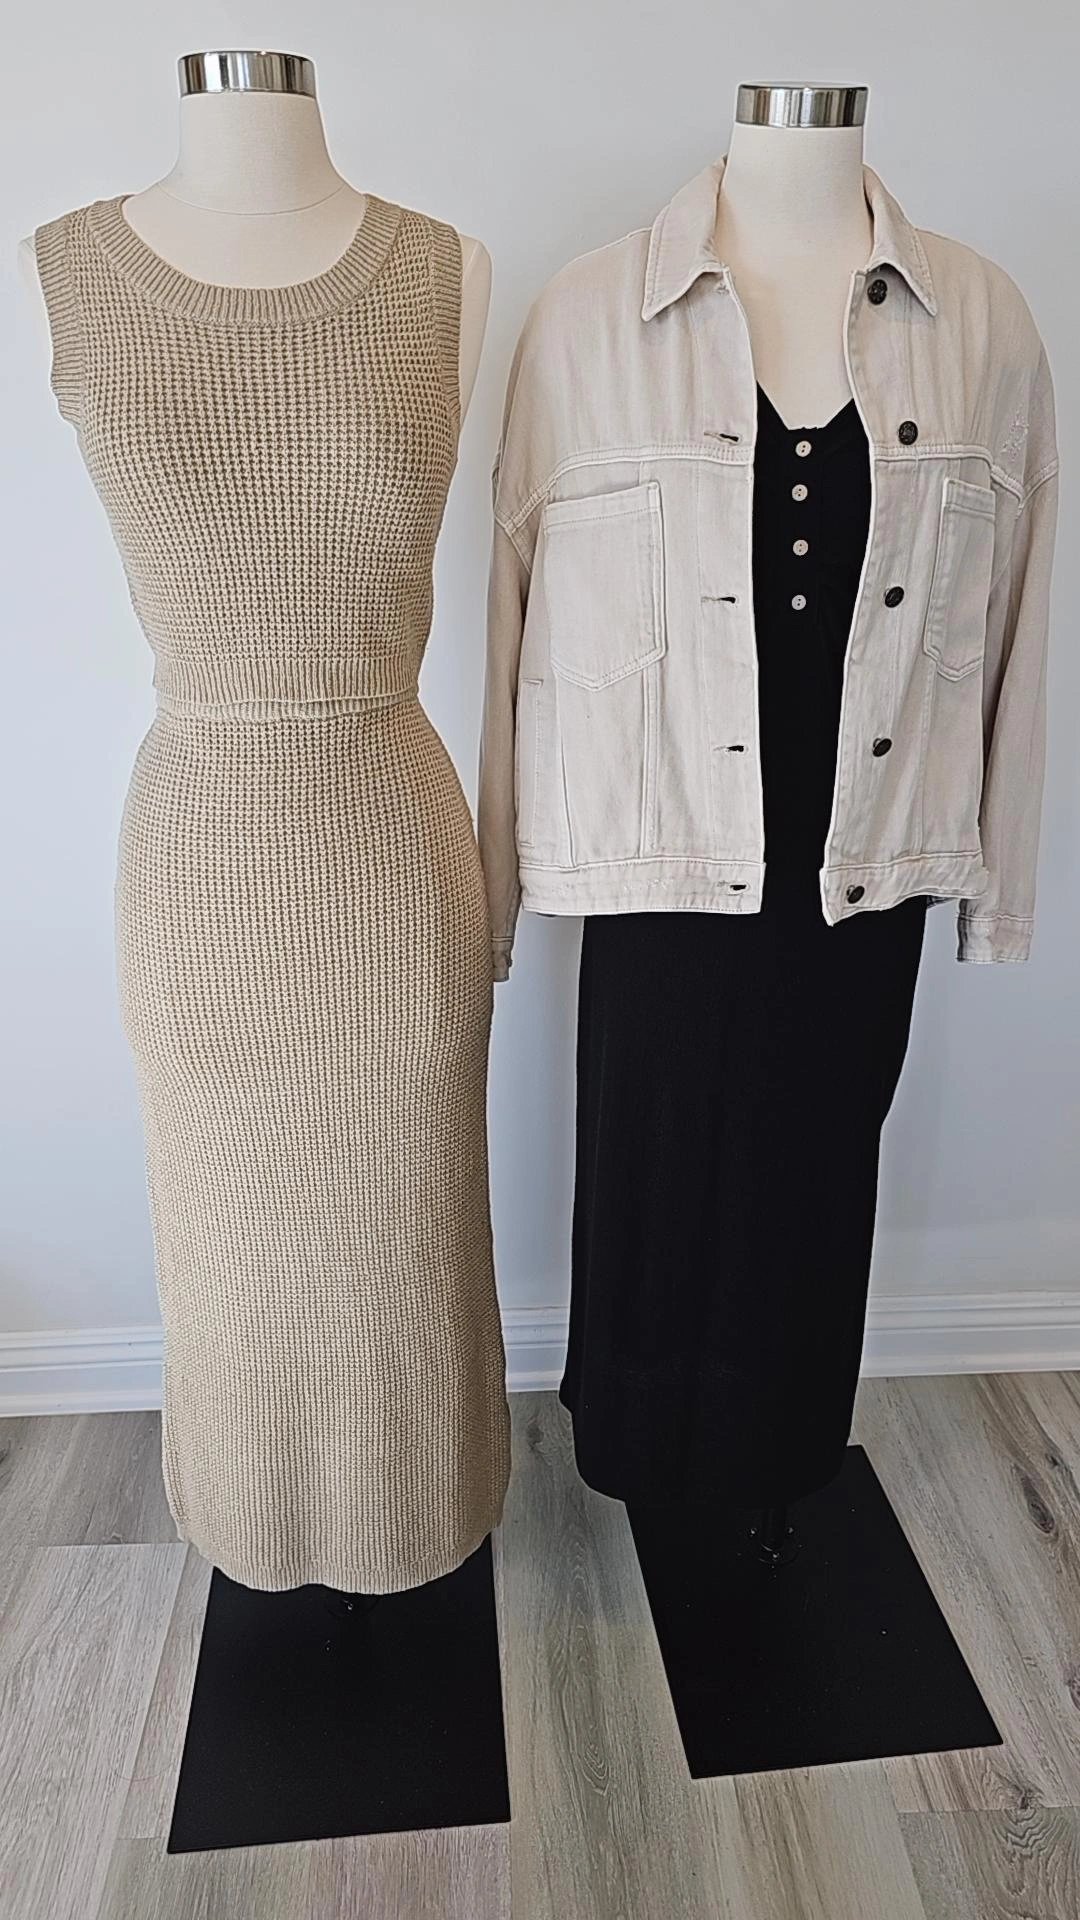 Image of Taylor knit dress